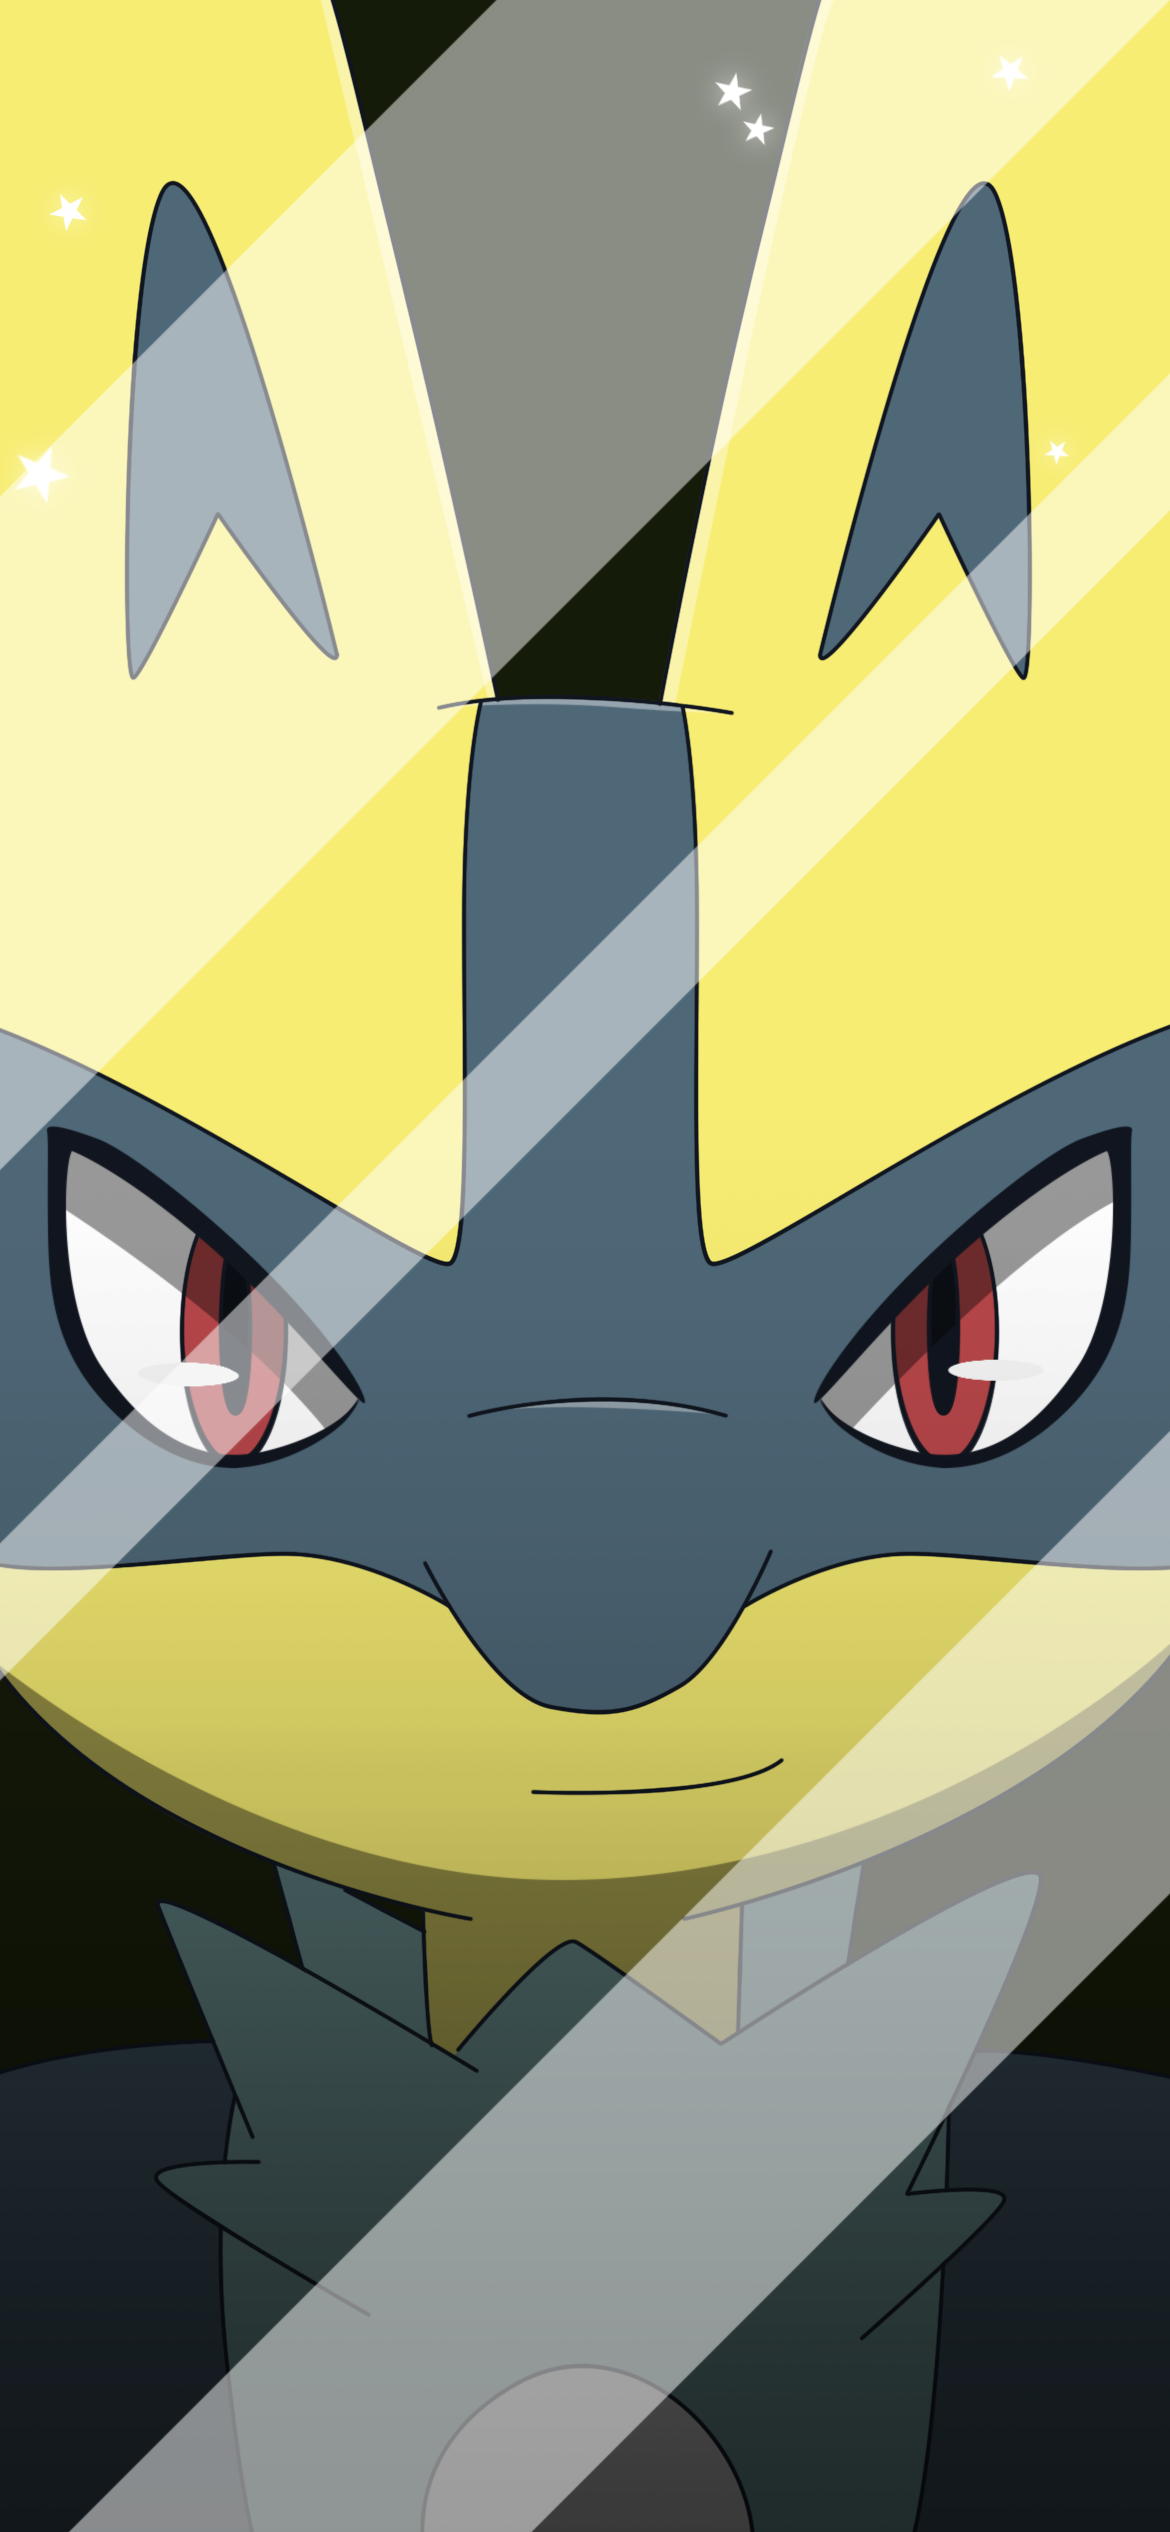 Shiny Lucario Pokemon Ranger Edit by hf978rh7834hru4r43 on DeviantArt